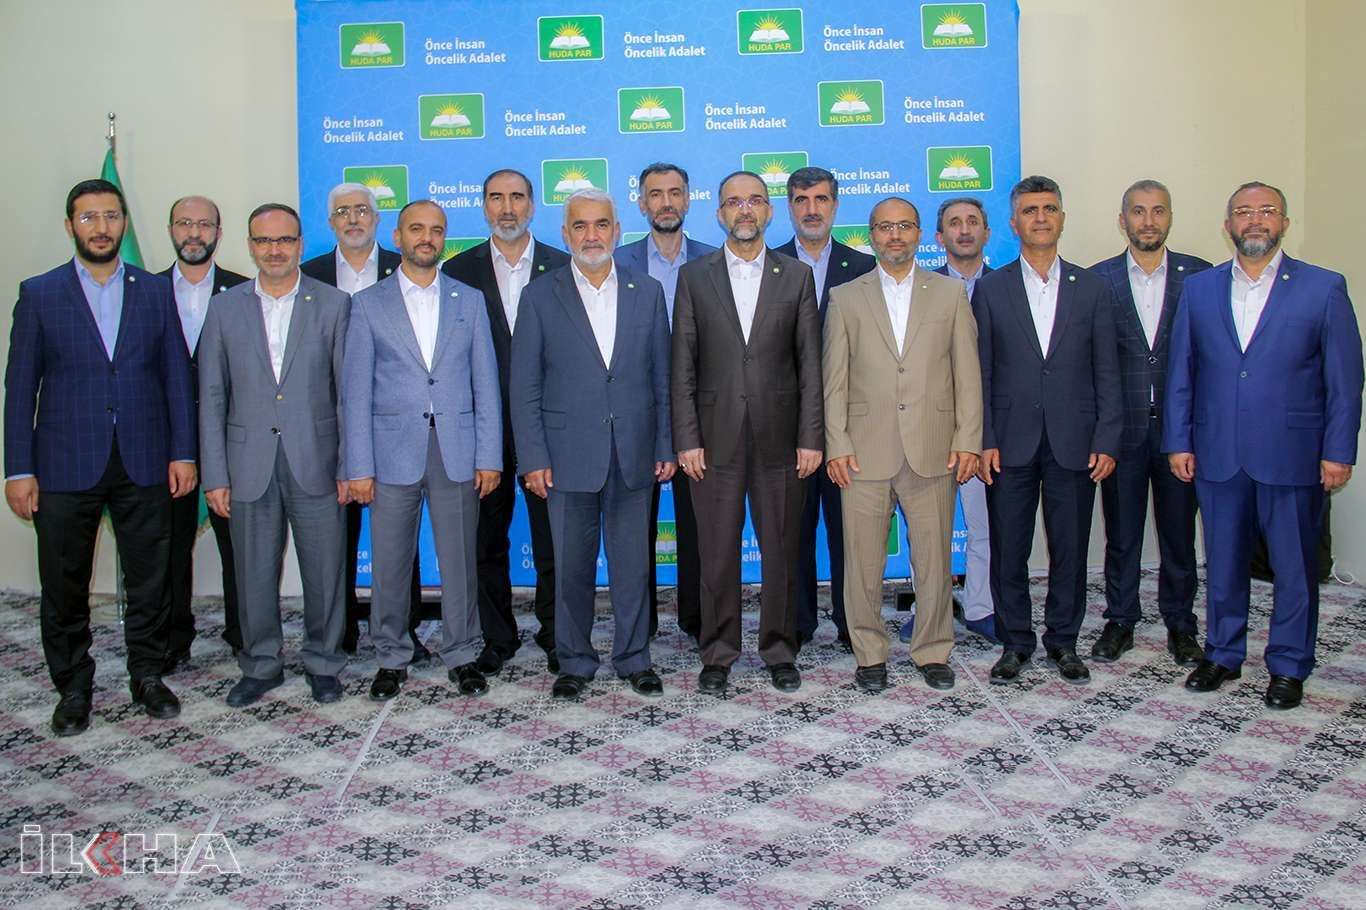 HÜDA PAR announces its new presidency council following congress